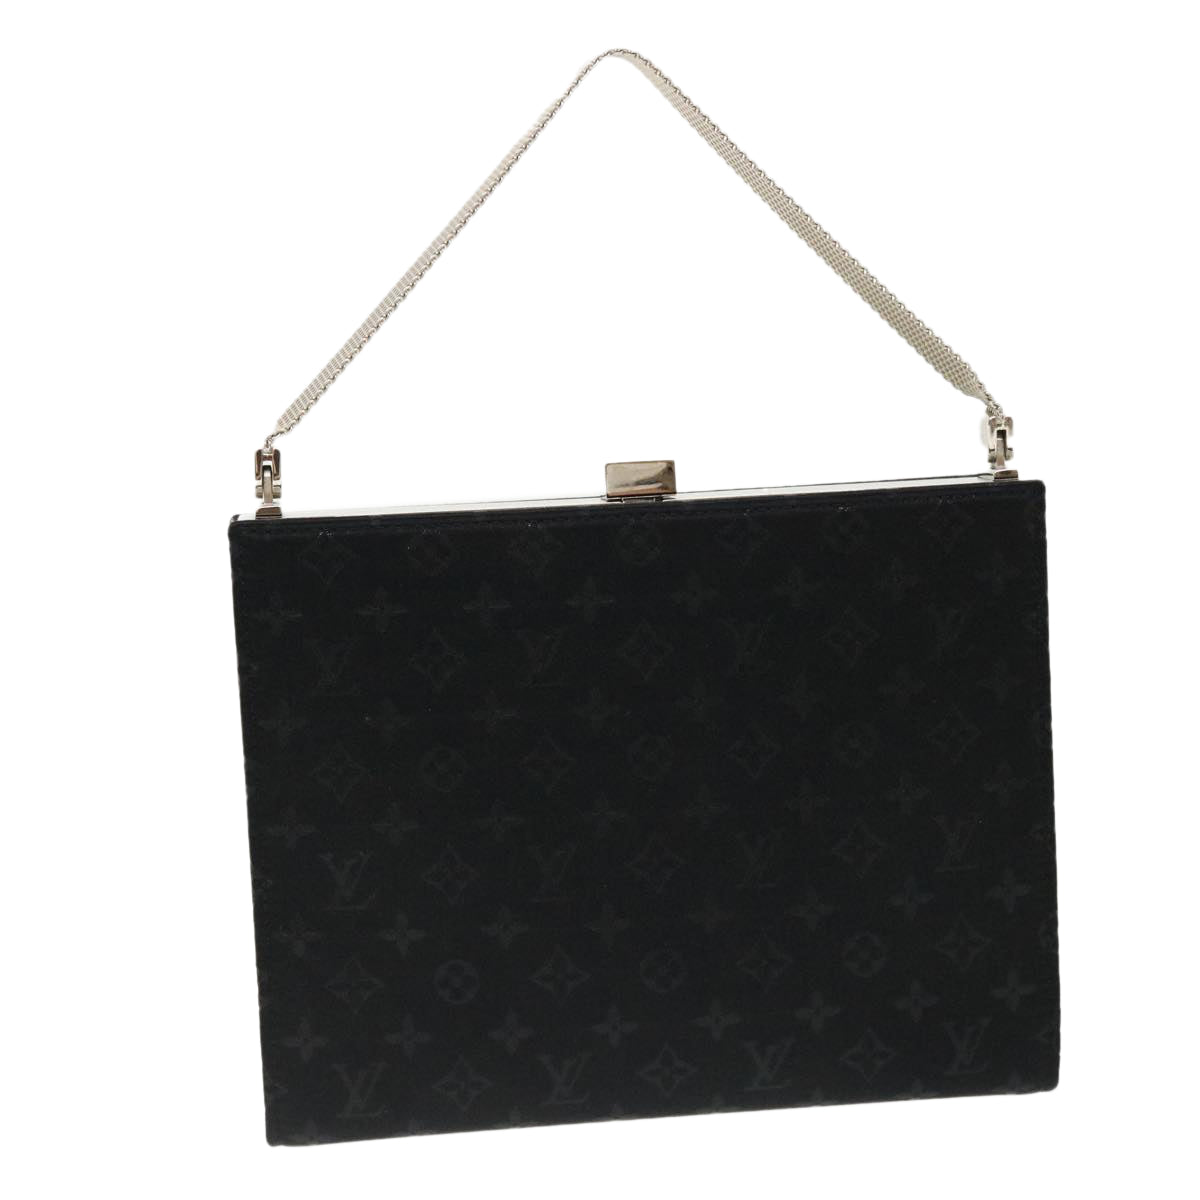 Louis Vuitton Patent WOC 2 in 1 Wallet Clutch Shoulder Bag in Box